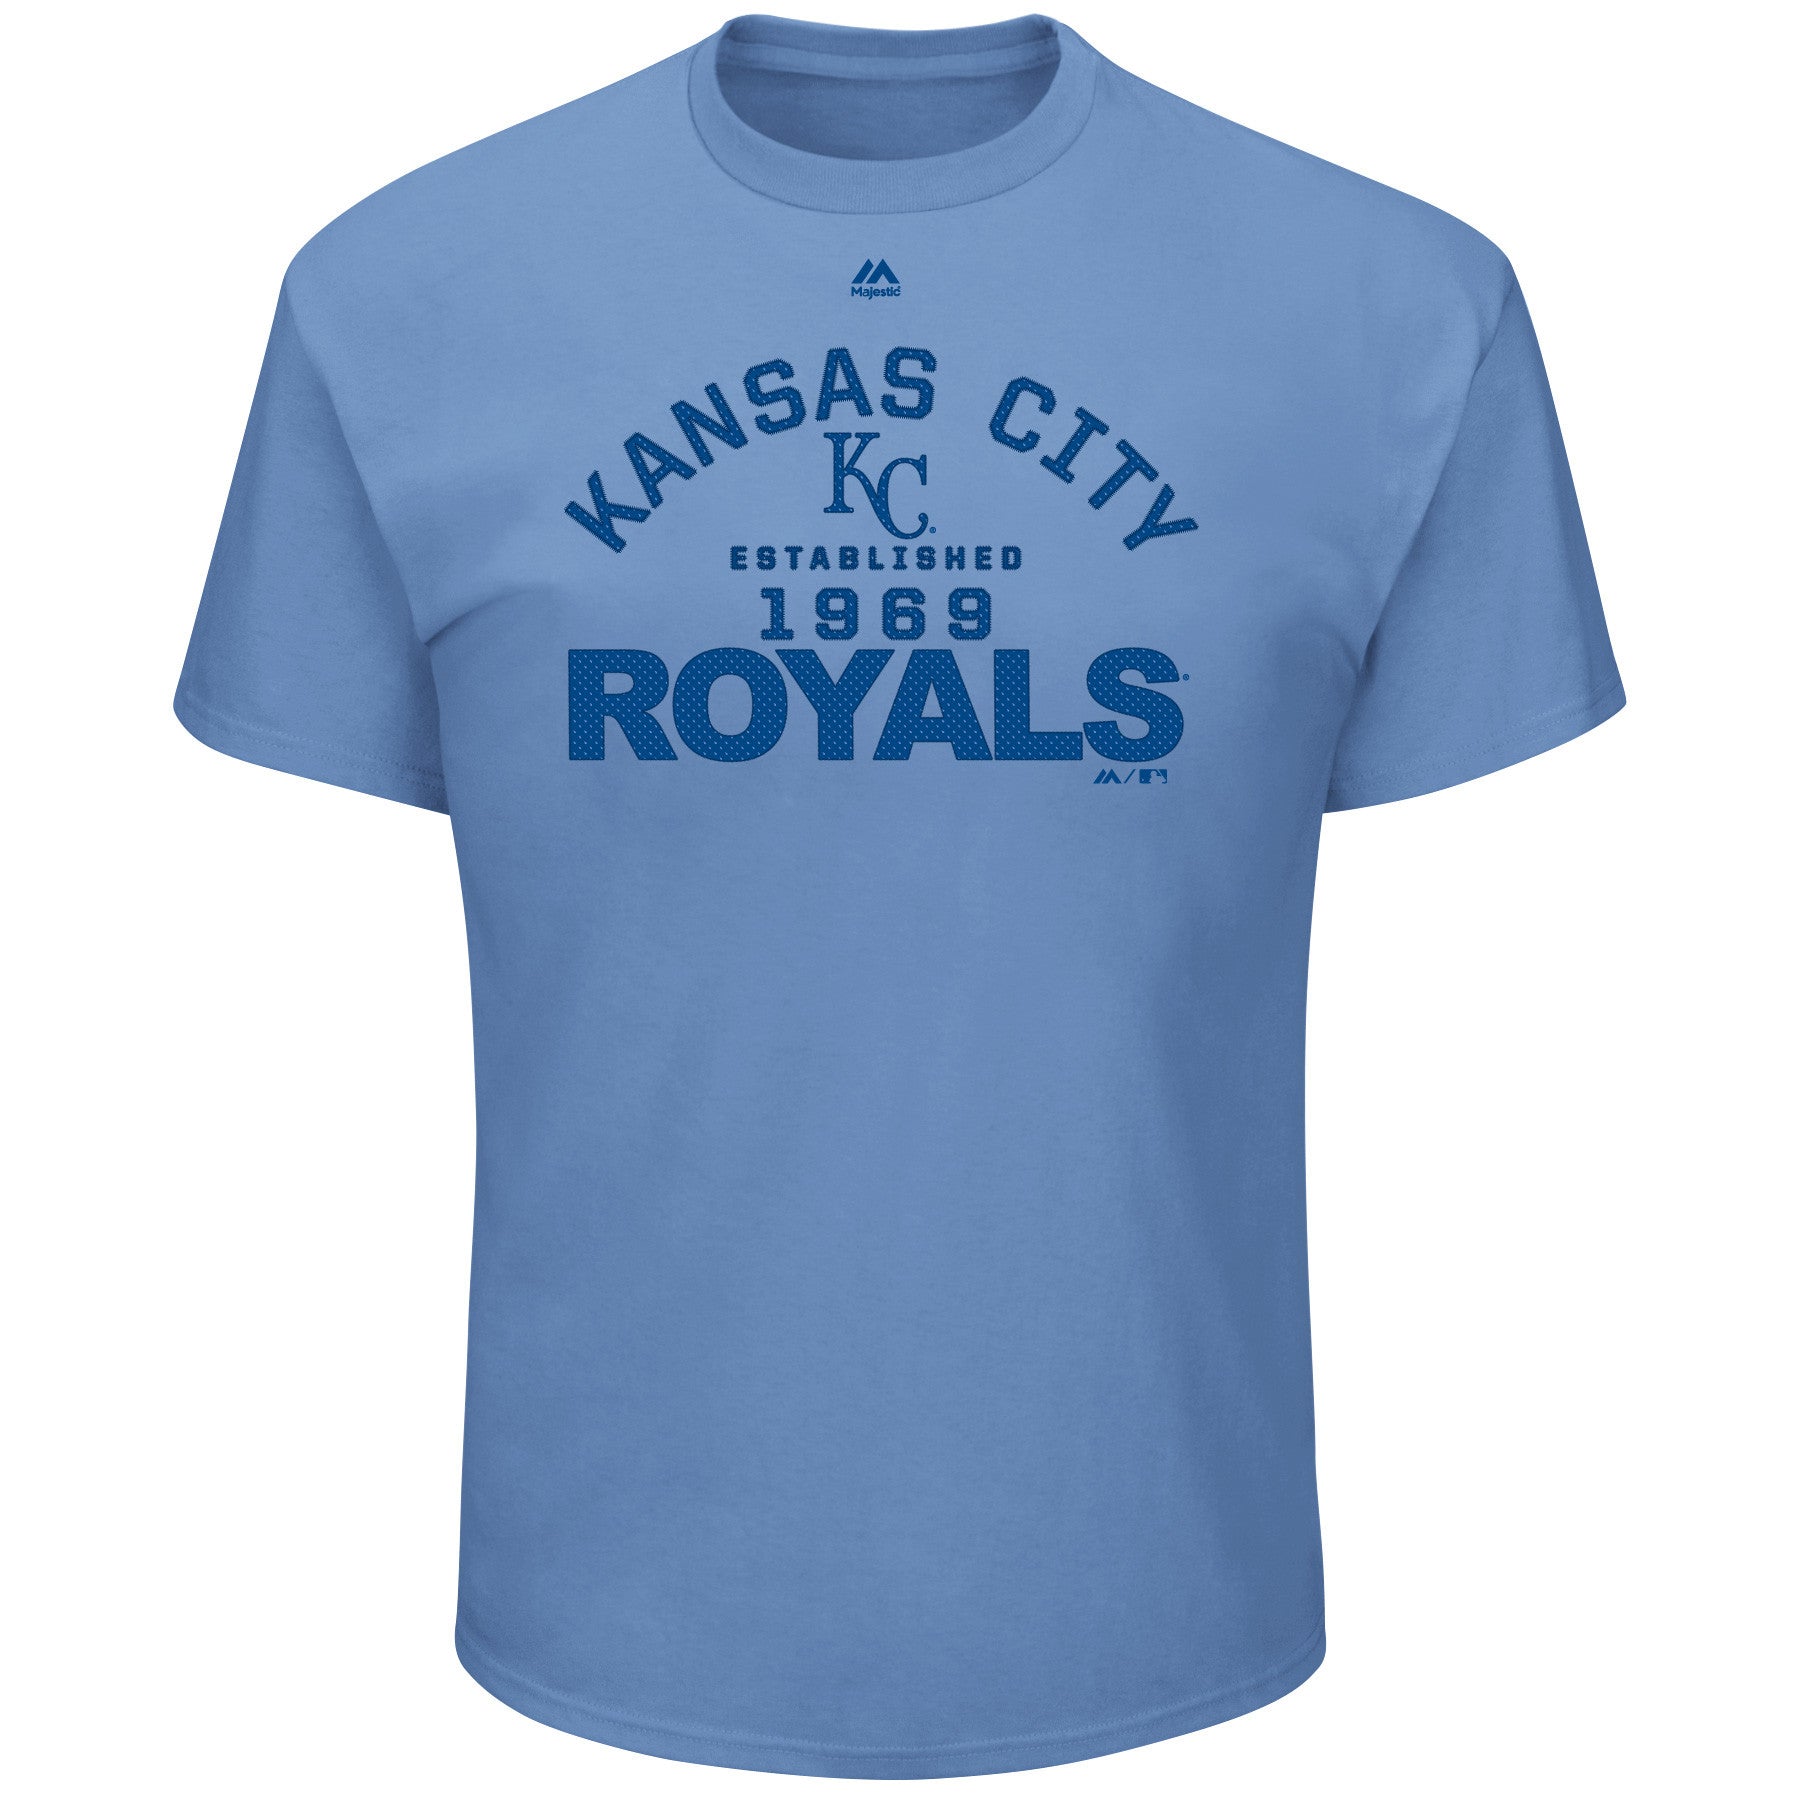 kc royals championship t shirt